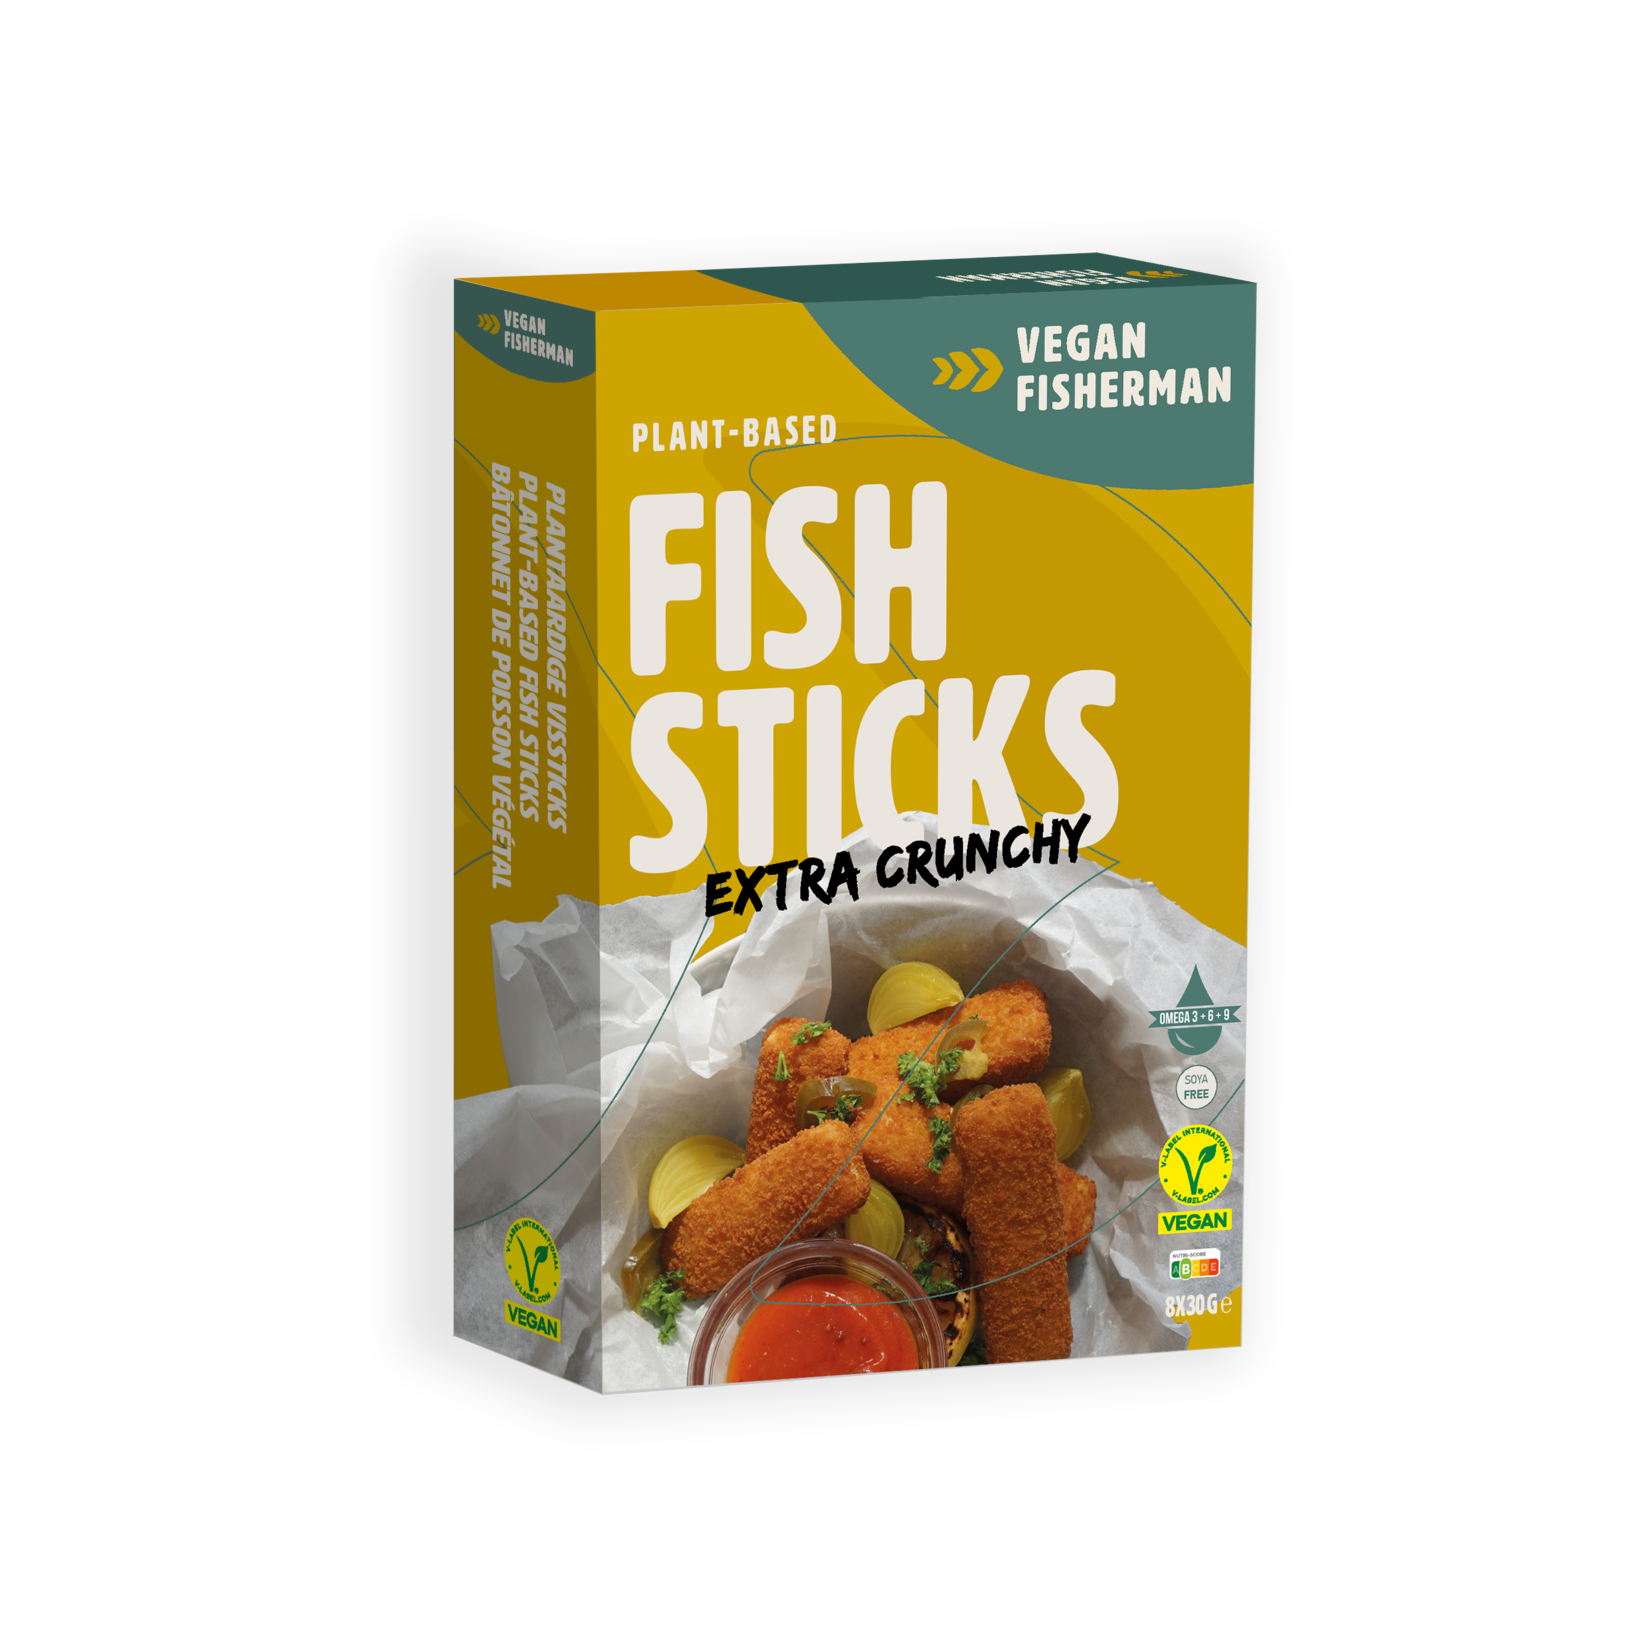 Vegan Visboer - Vegan Fisherman Vegan Fisherman Fish Stick | Vegan fish in a crunchy layer | Plant-based (= better!)